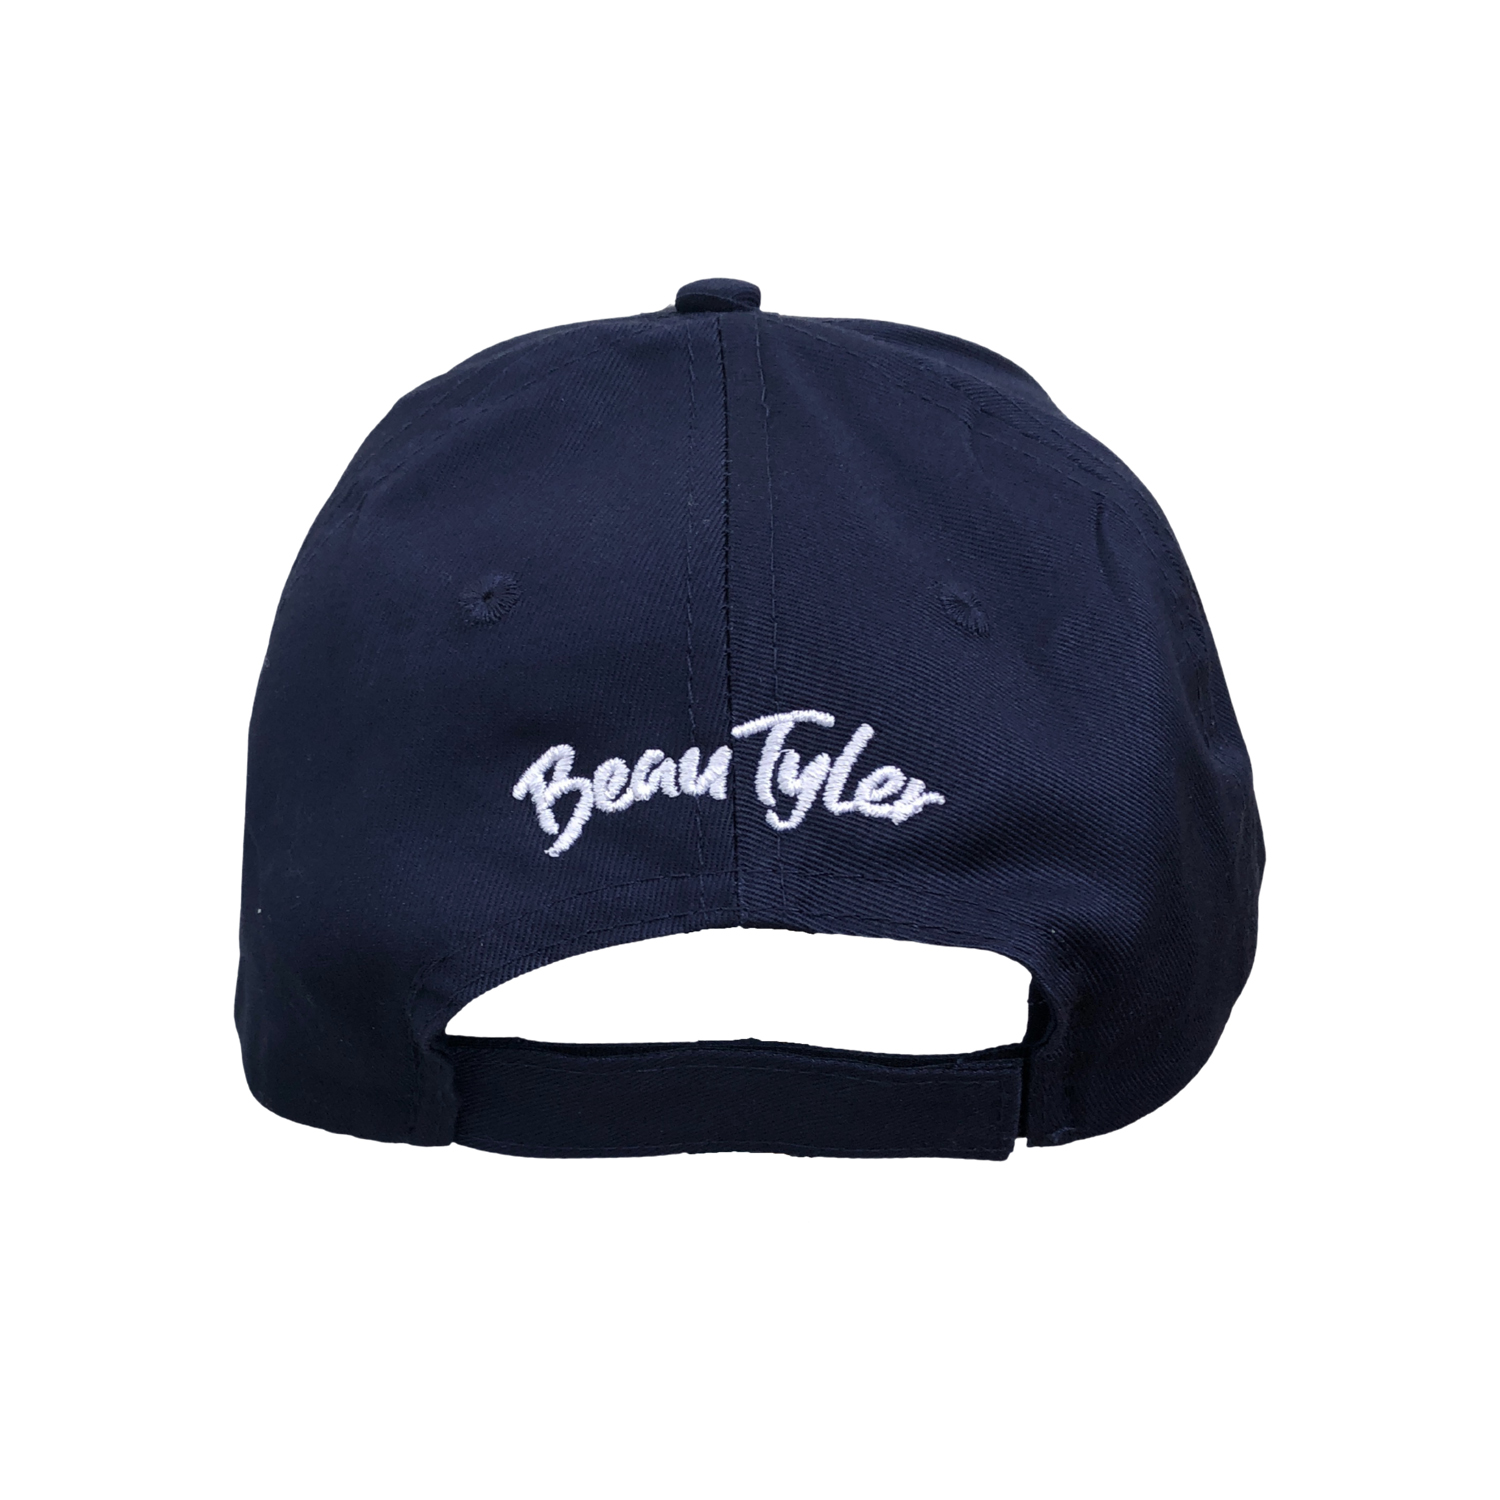 Beau Tyler - Austin hat navy blue back